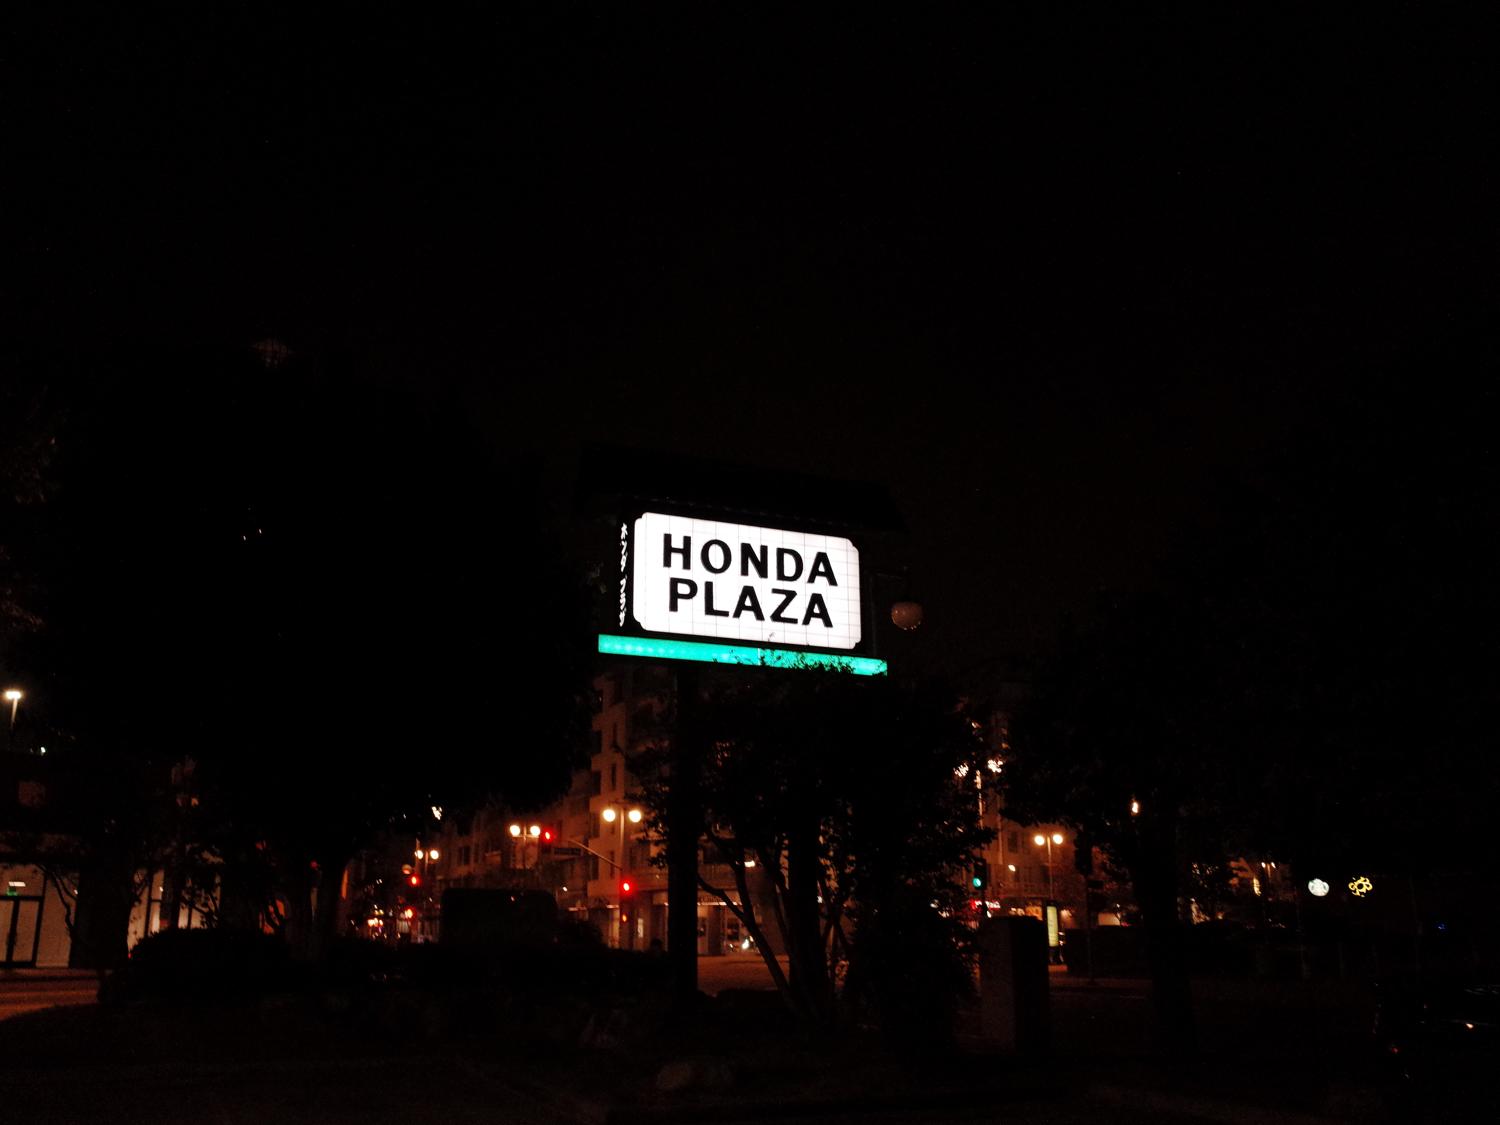 Honda plaza